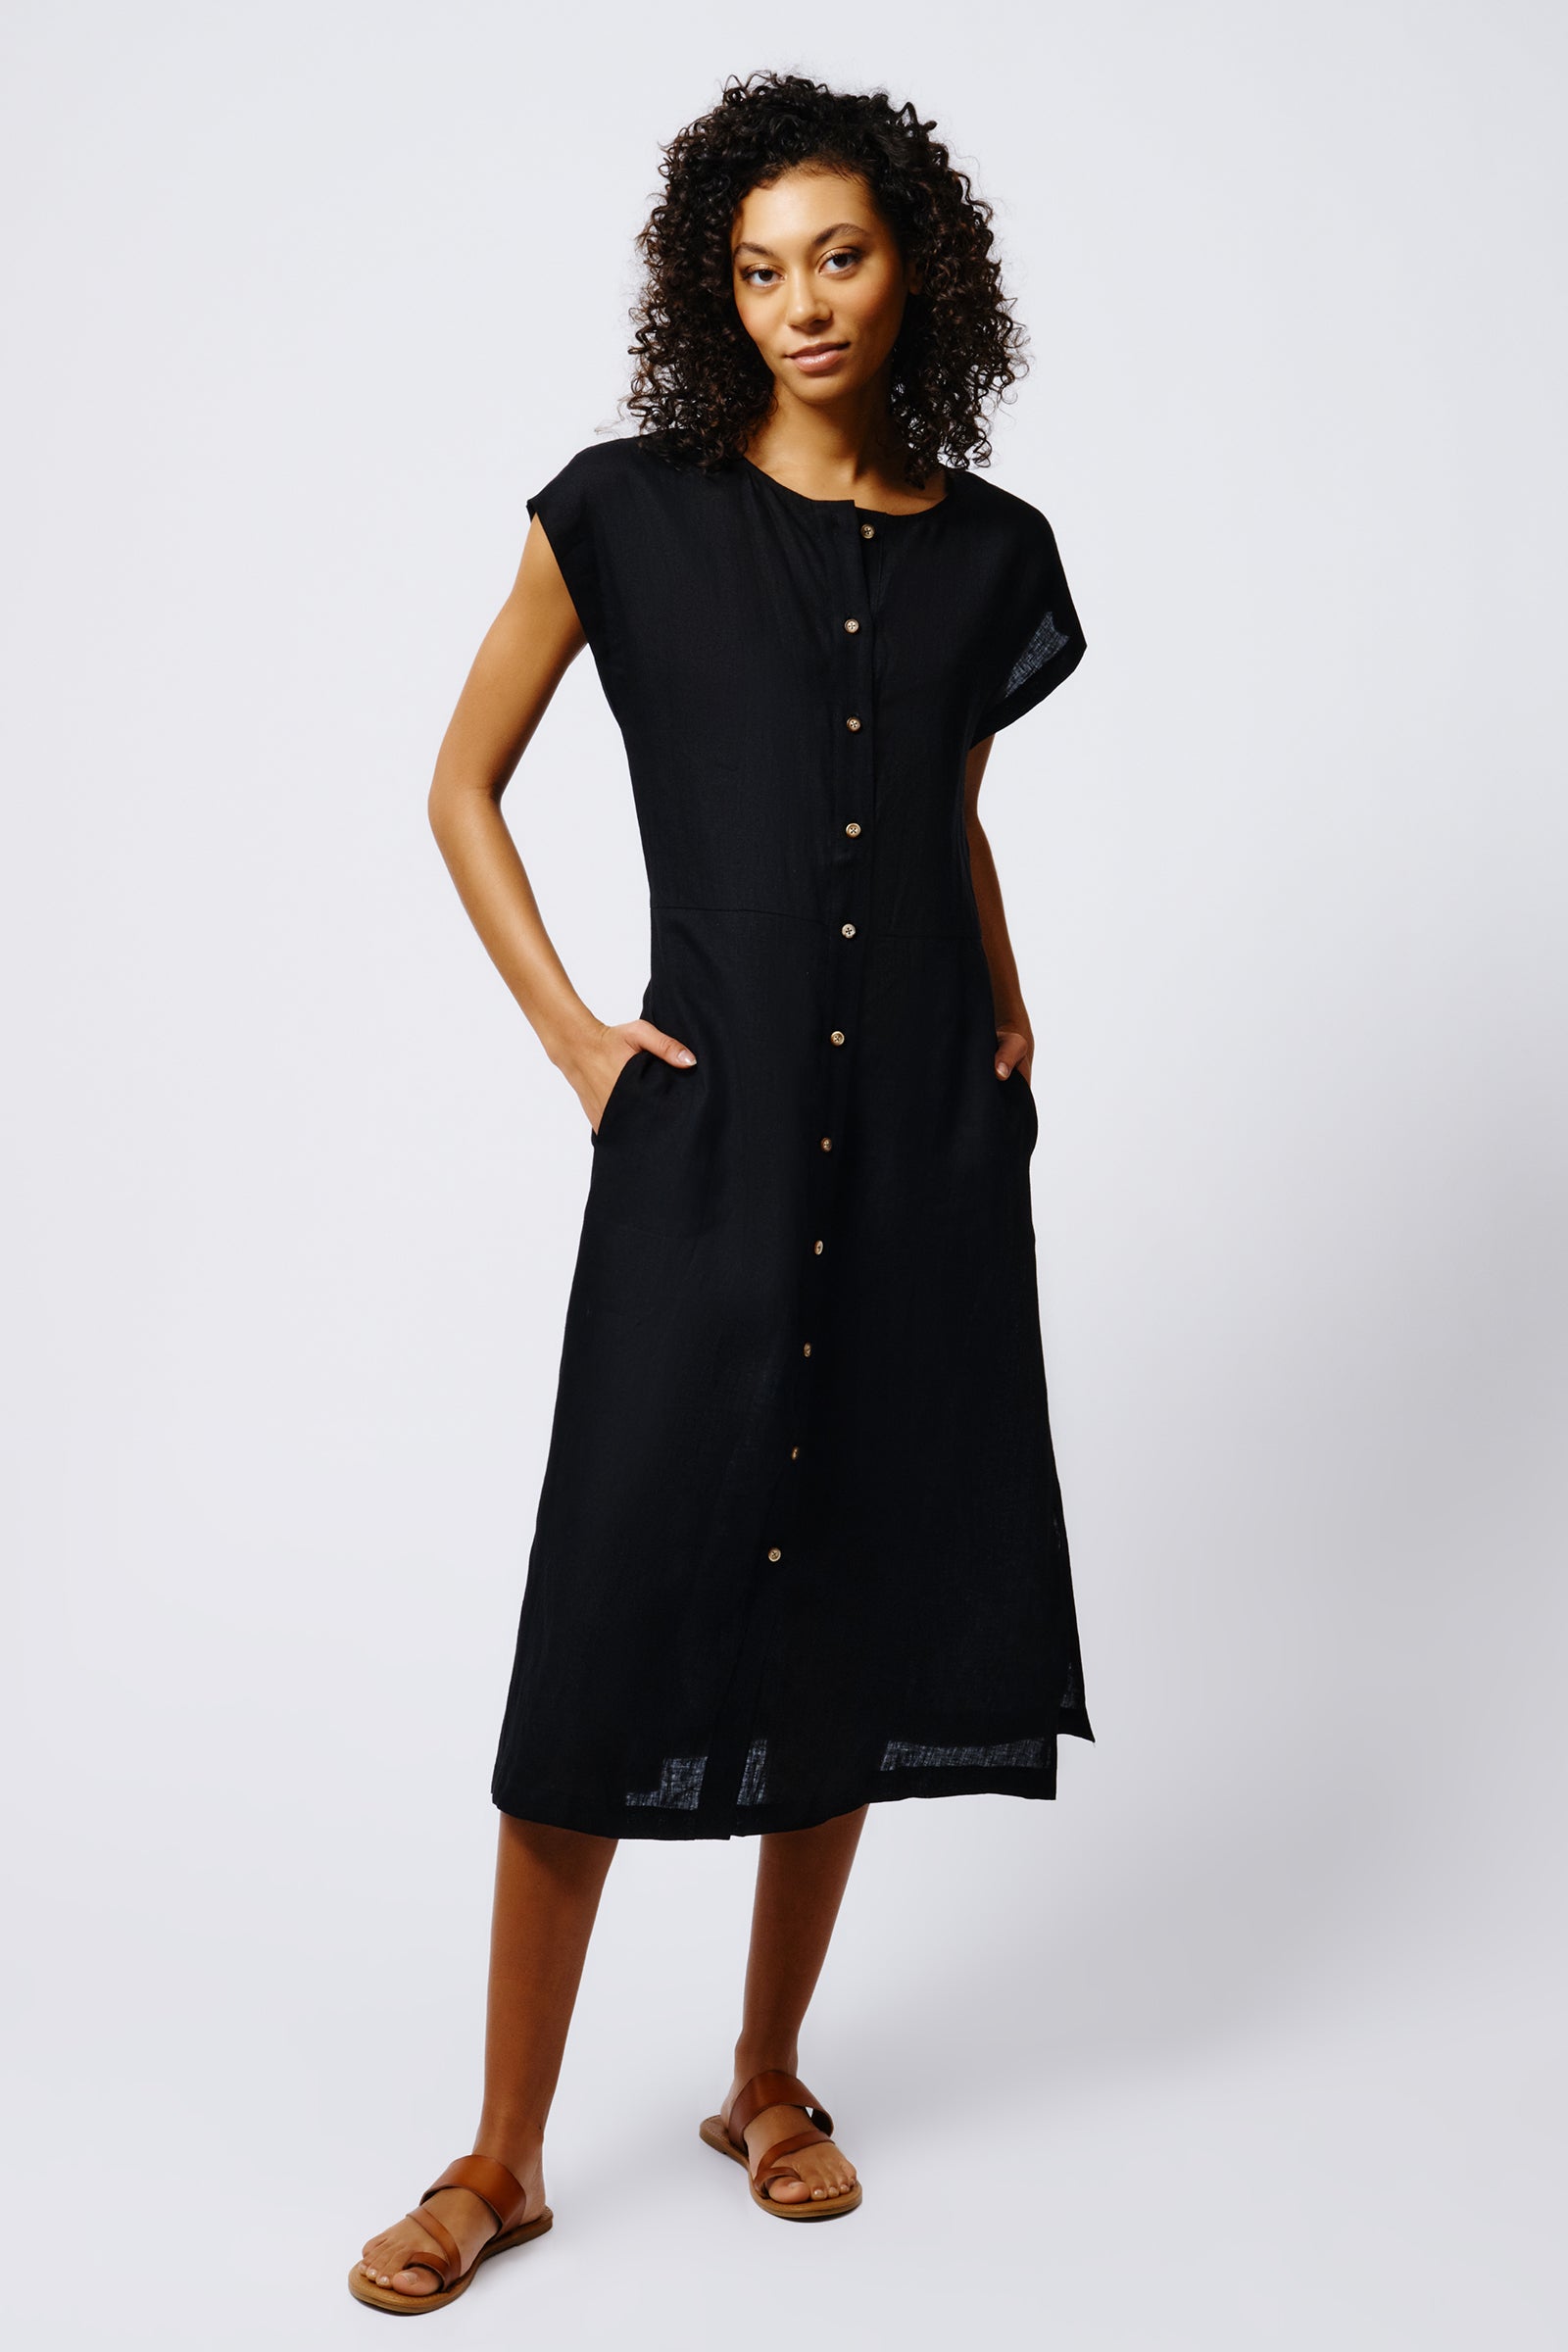 Kal Rieman Harlow Cap Sleeve Dress in Black Linen on Model Full Front View 3